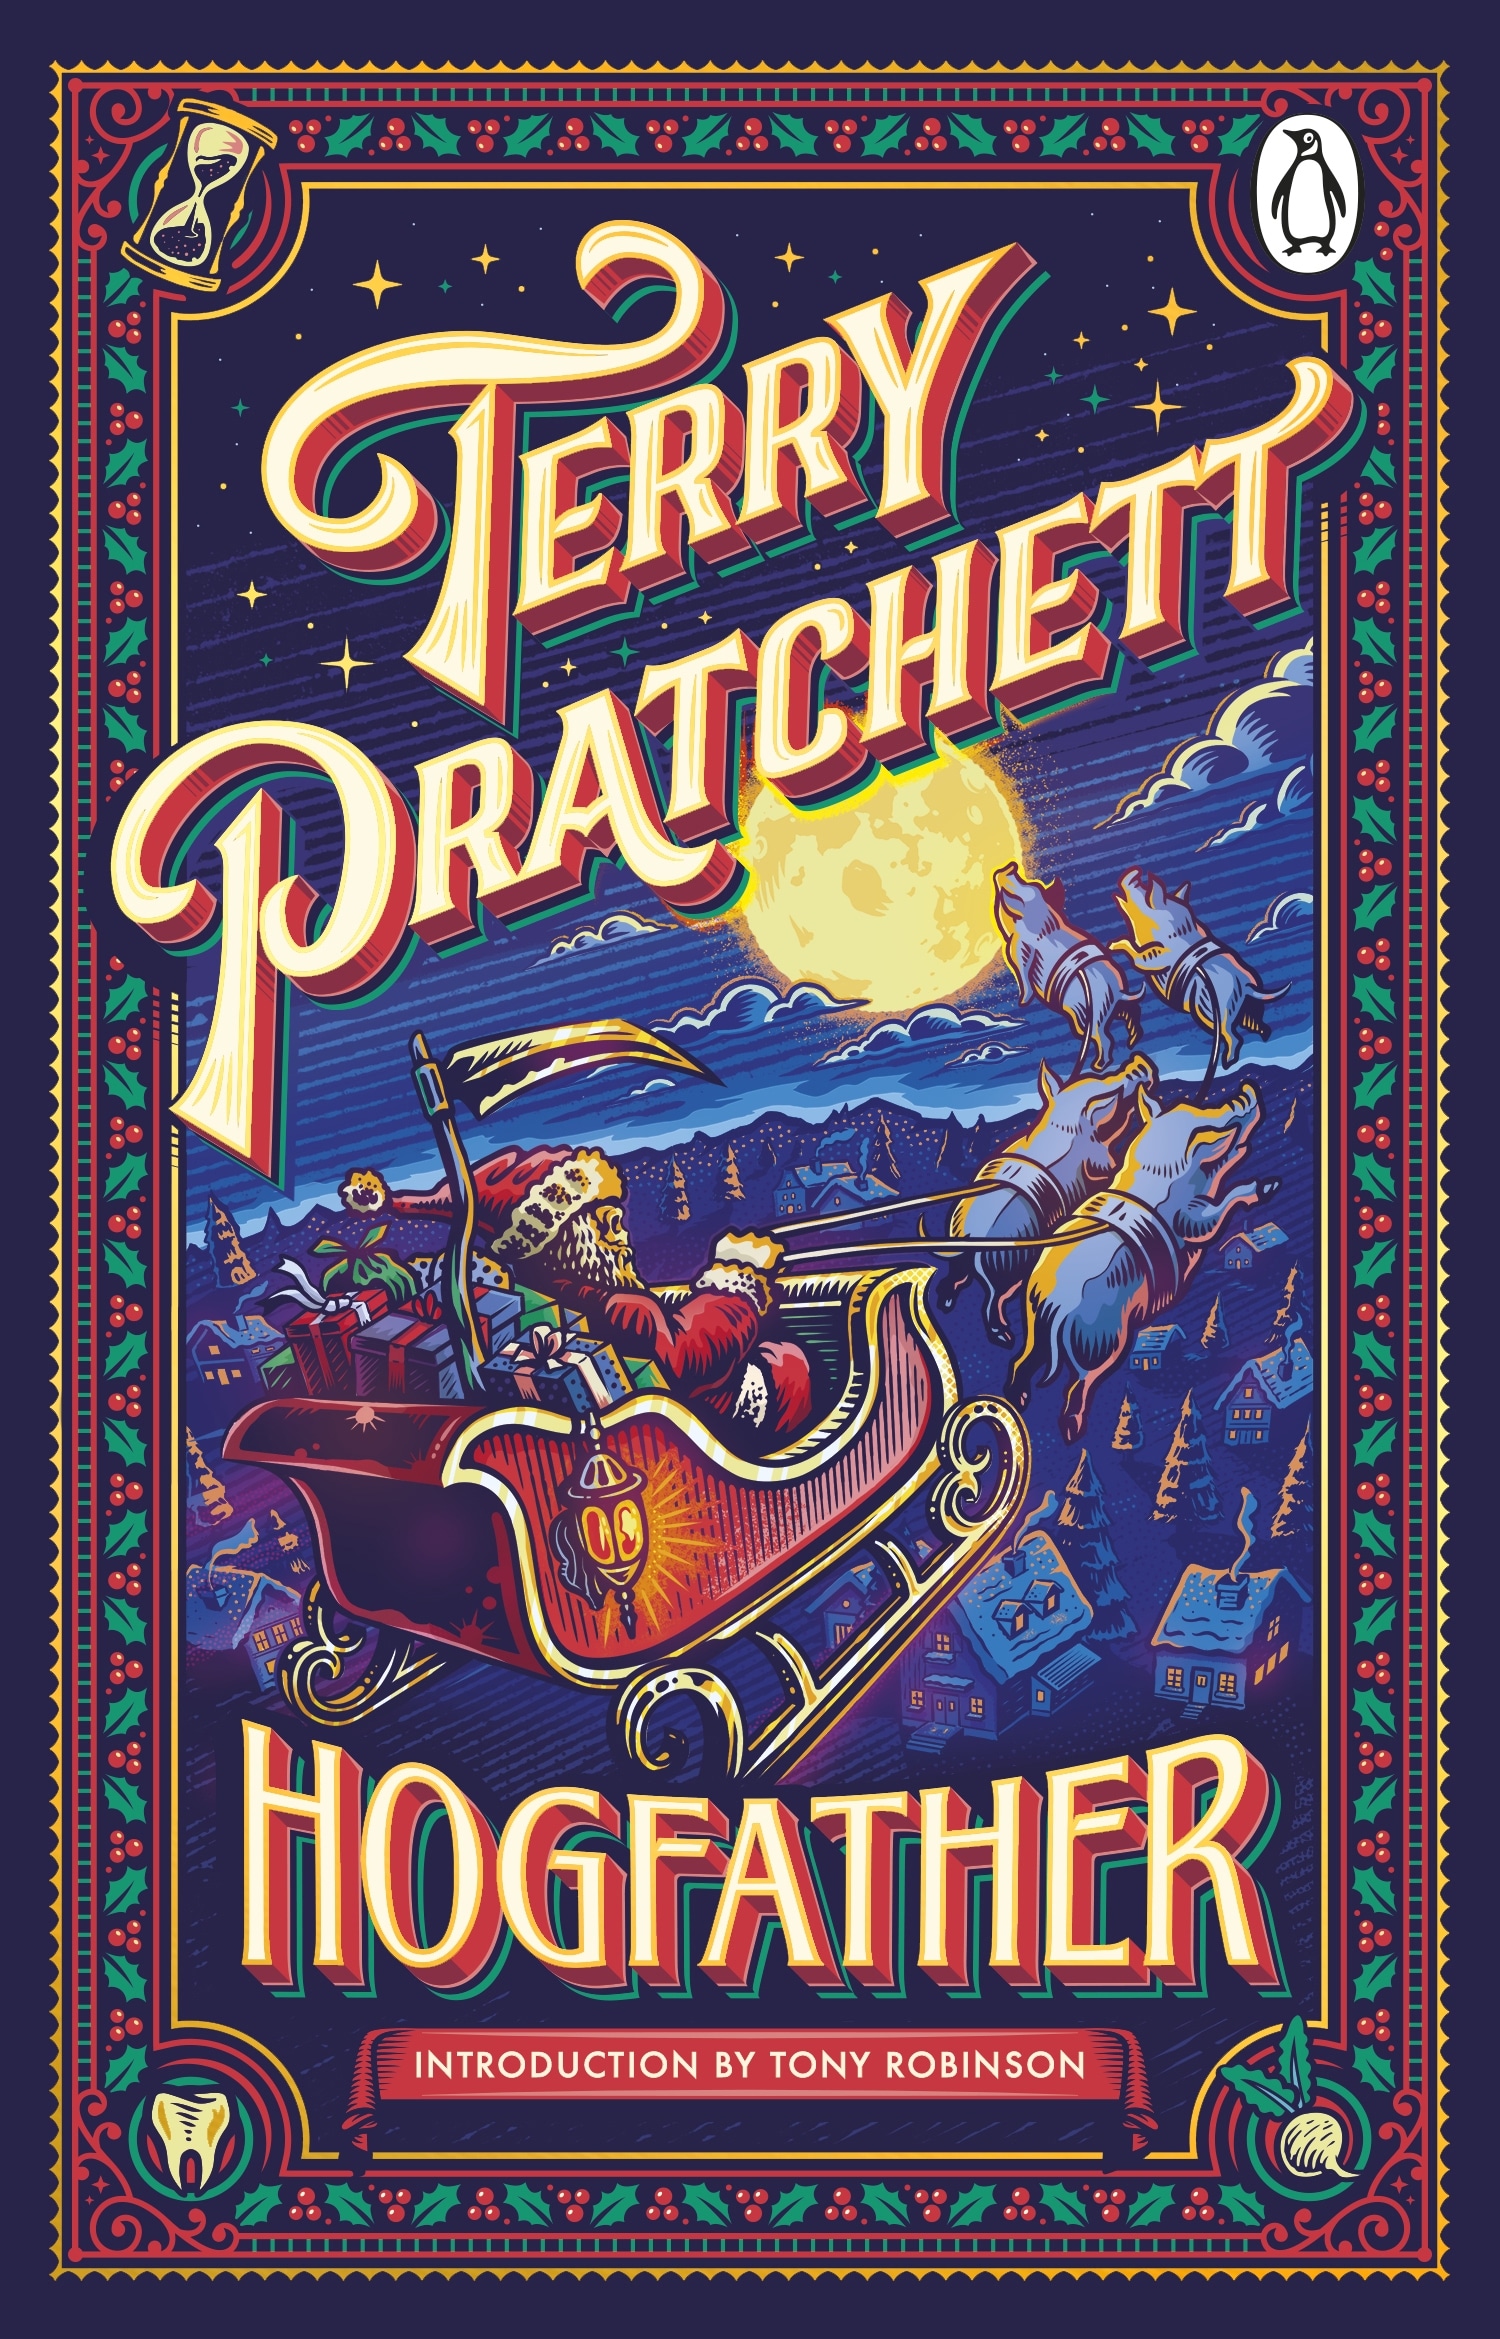 Book “Hogfather” by Terry Pratchett — October 14, 2021